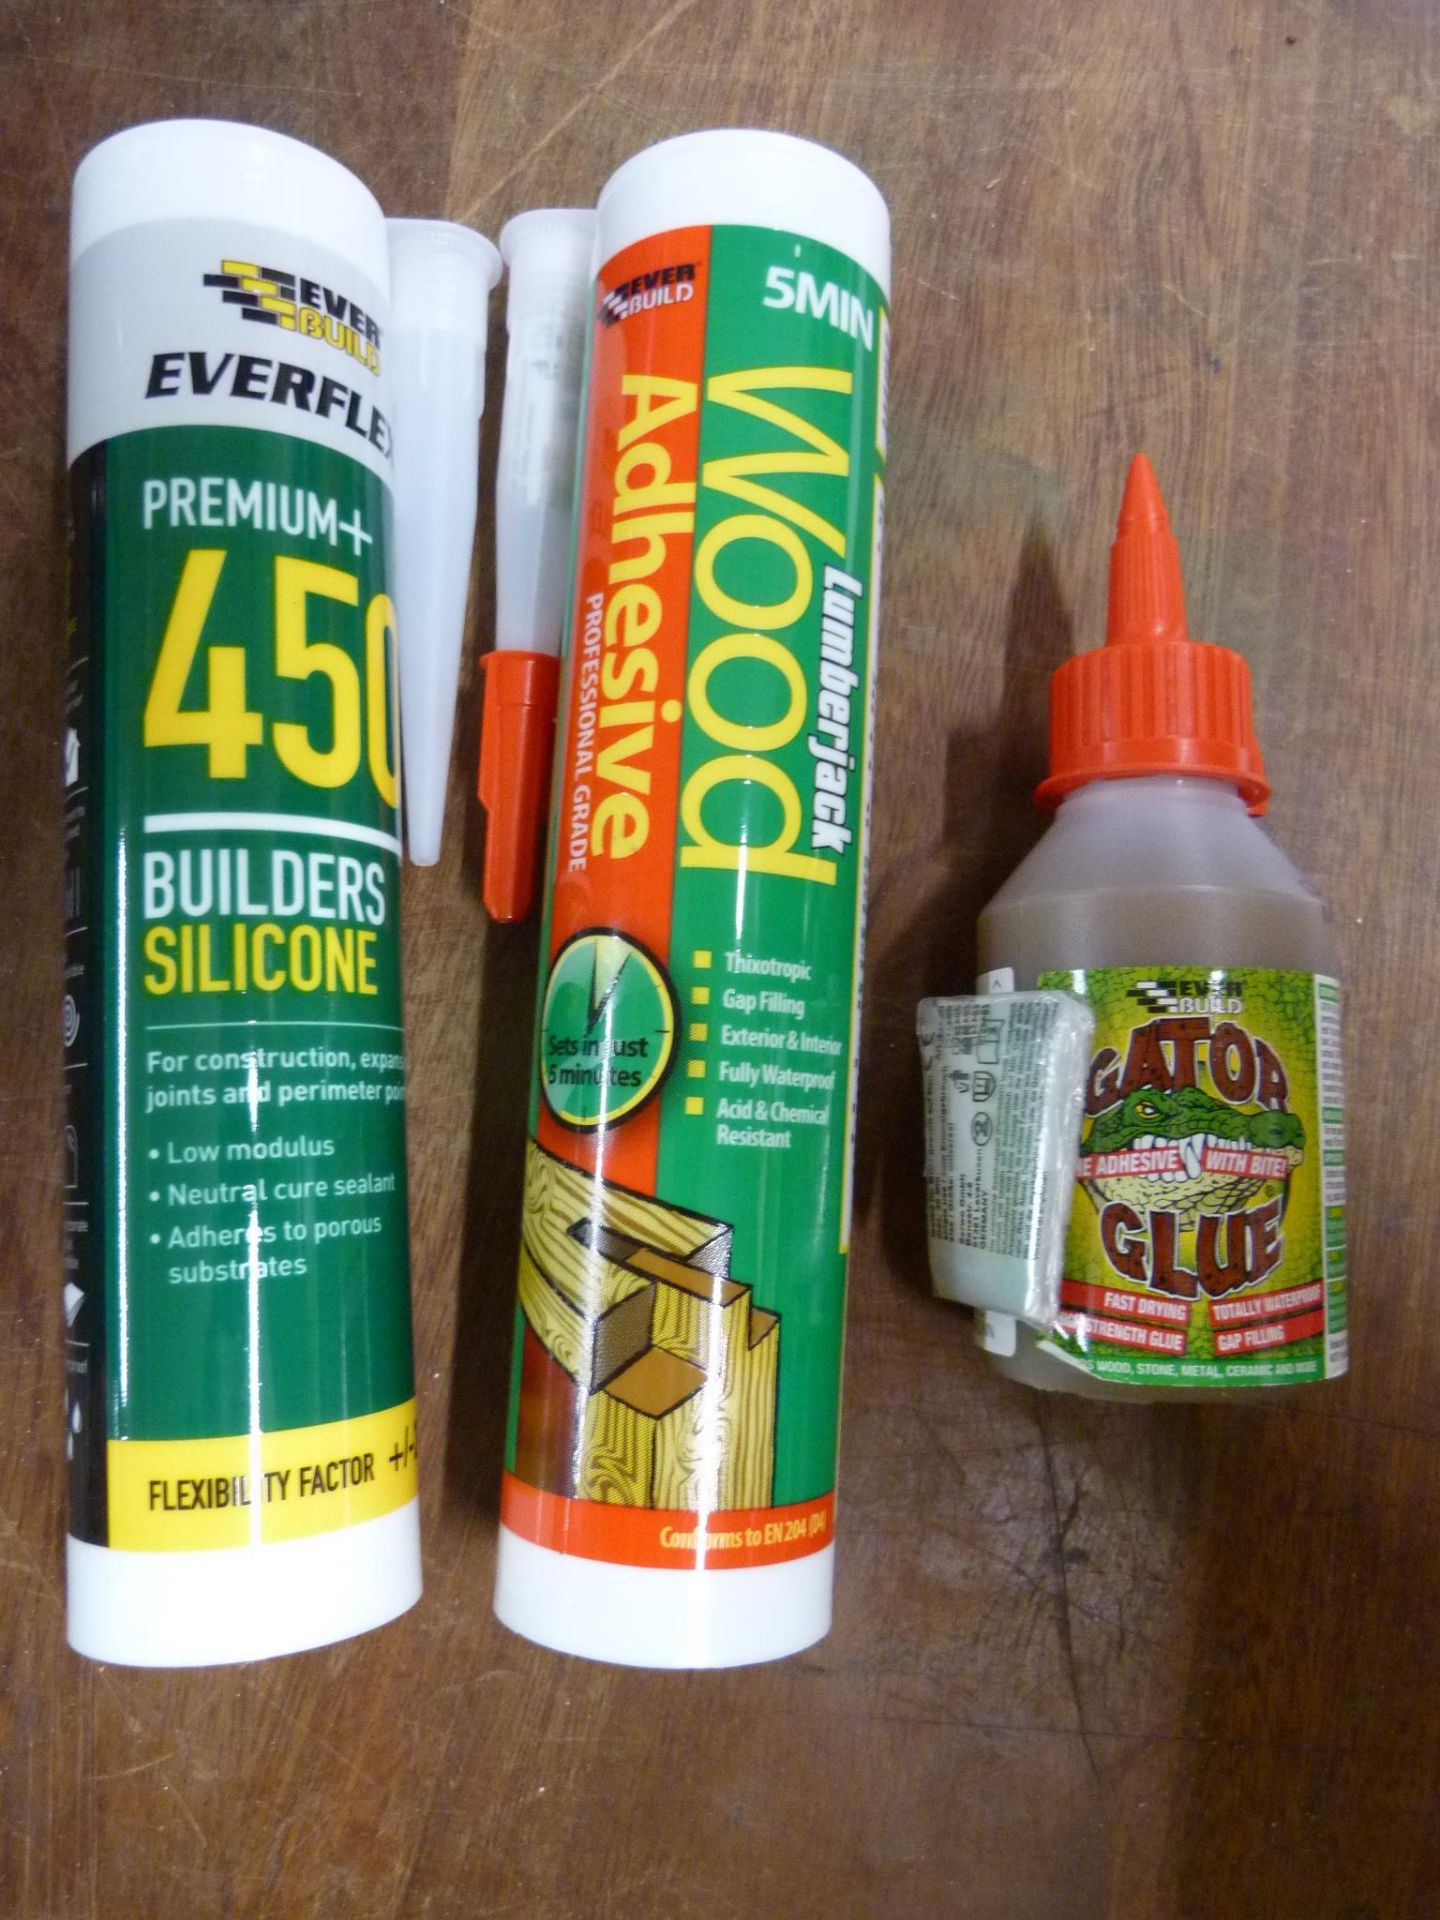 Three Boxed; Gator Glue, Wood Adhesive, and Builde